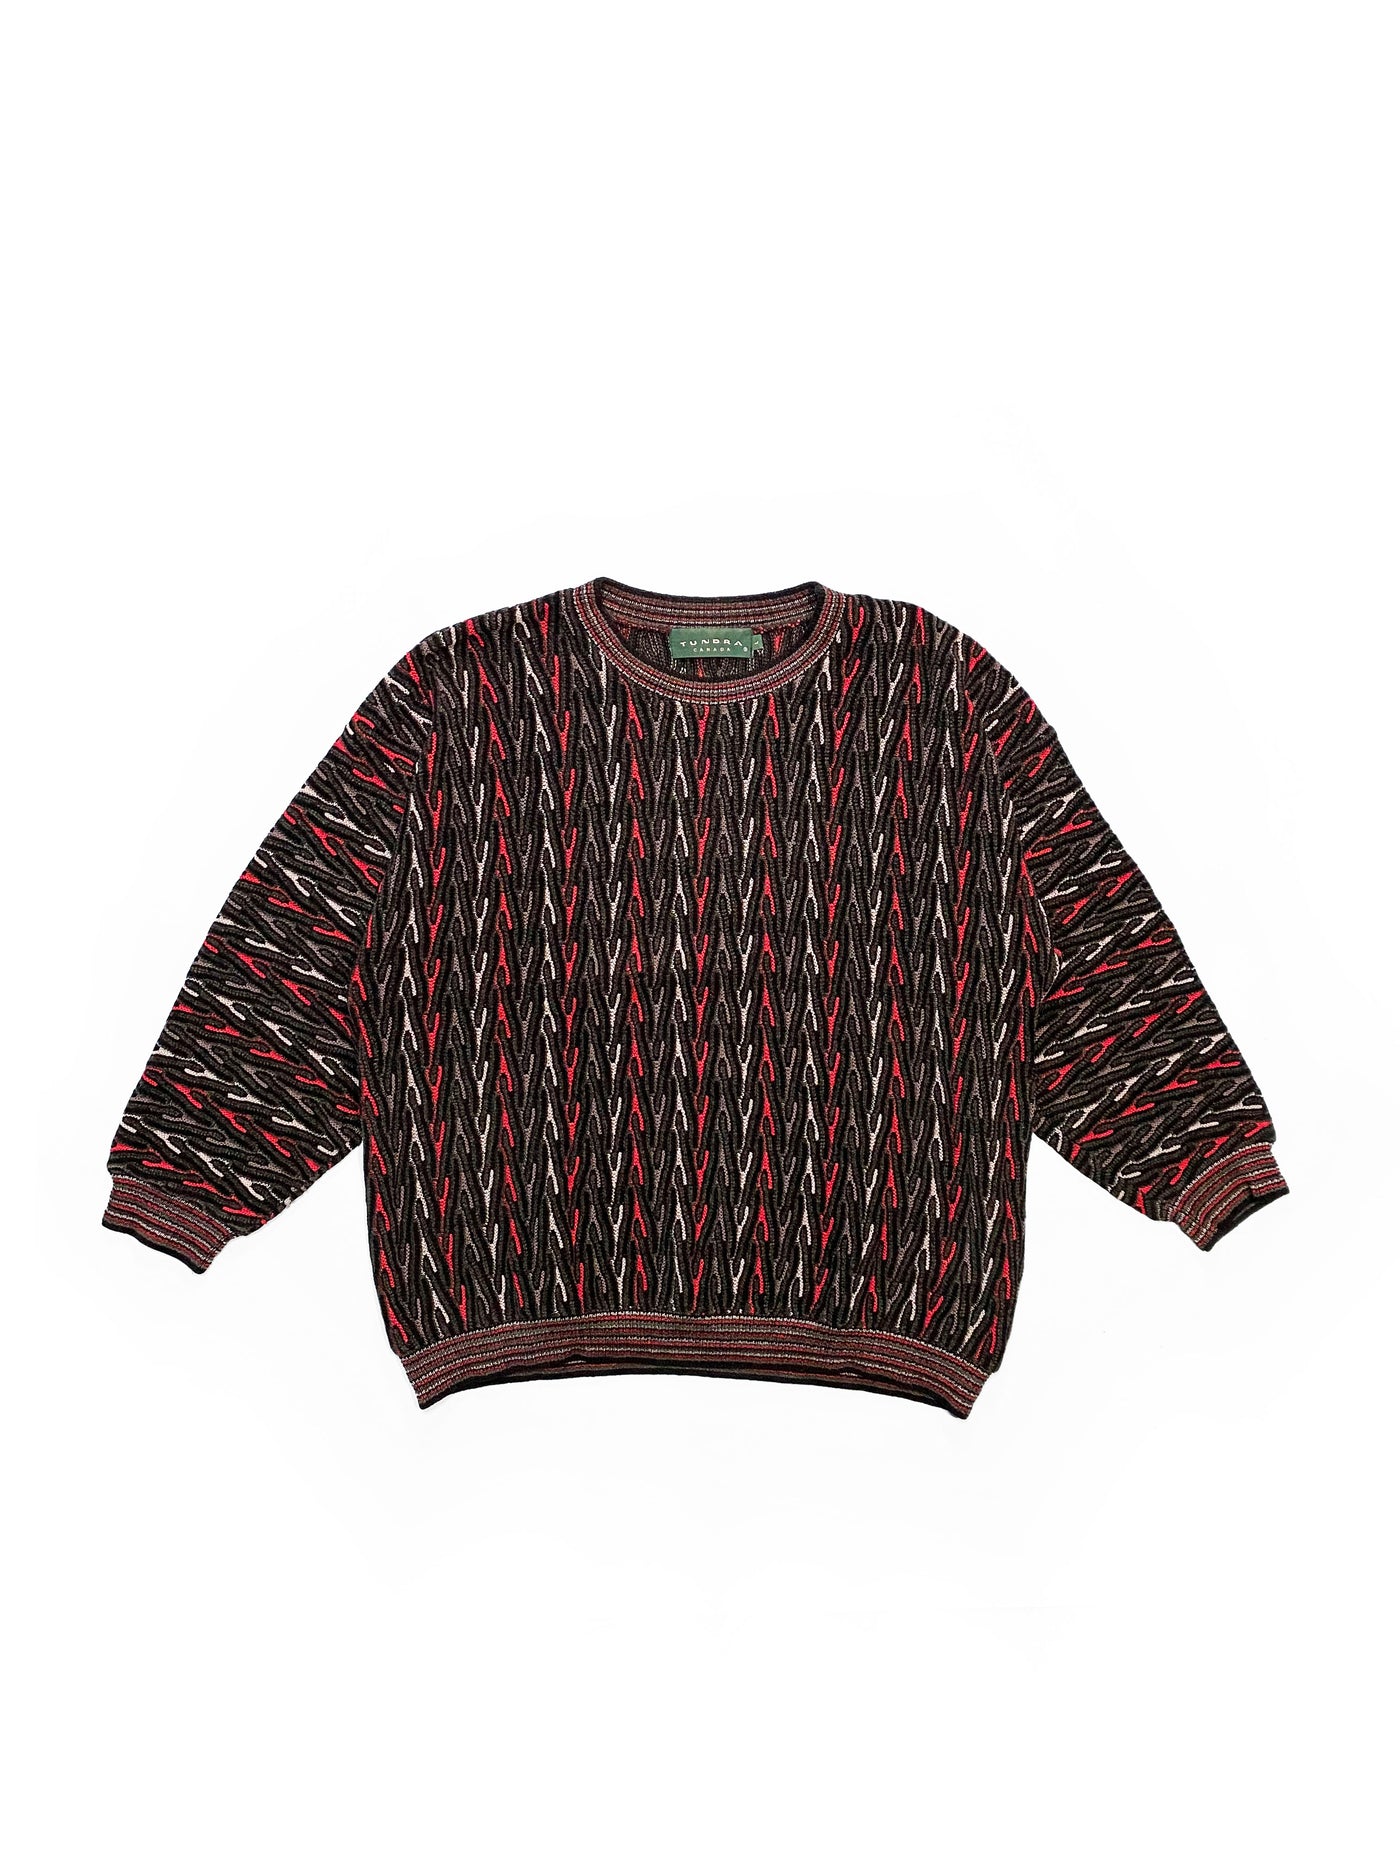 Vintage 90s Tundra Coogi Style Sweater